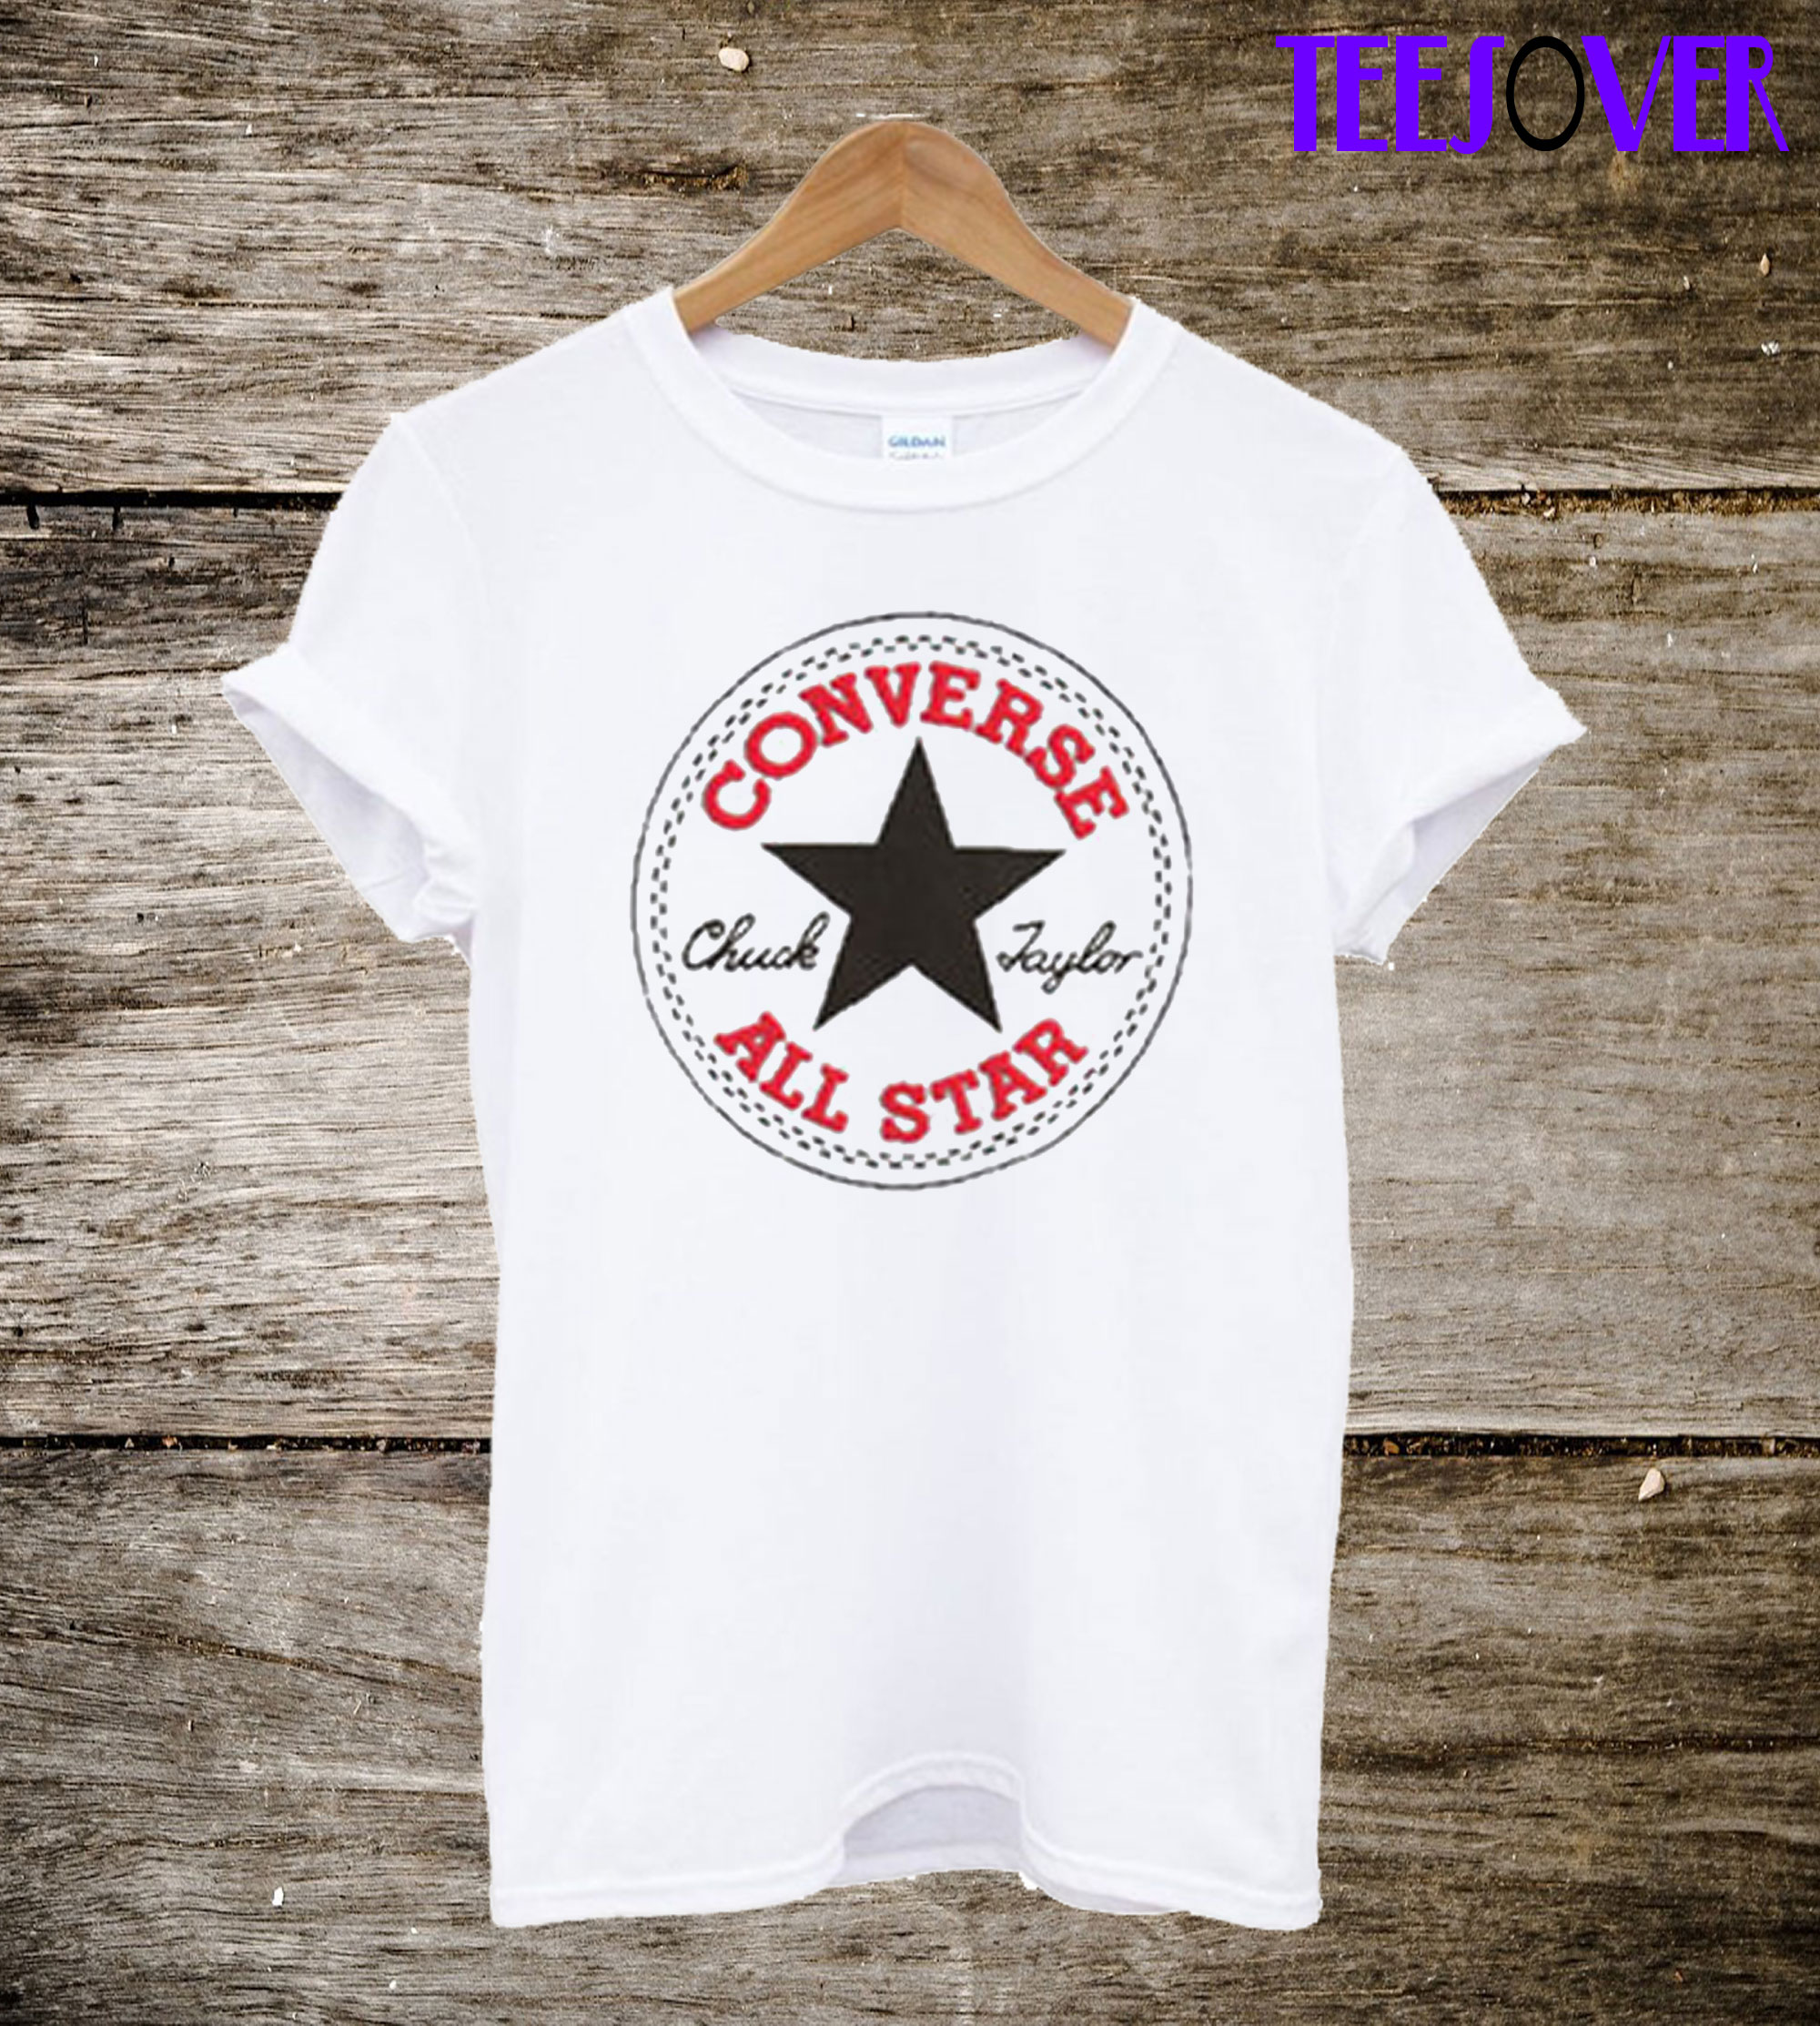 ويات Converse All Star T Shirt ويات